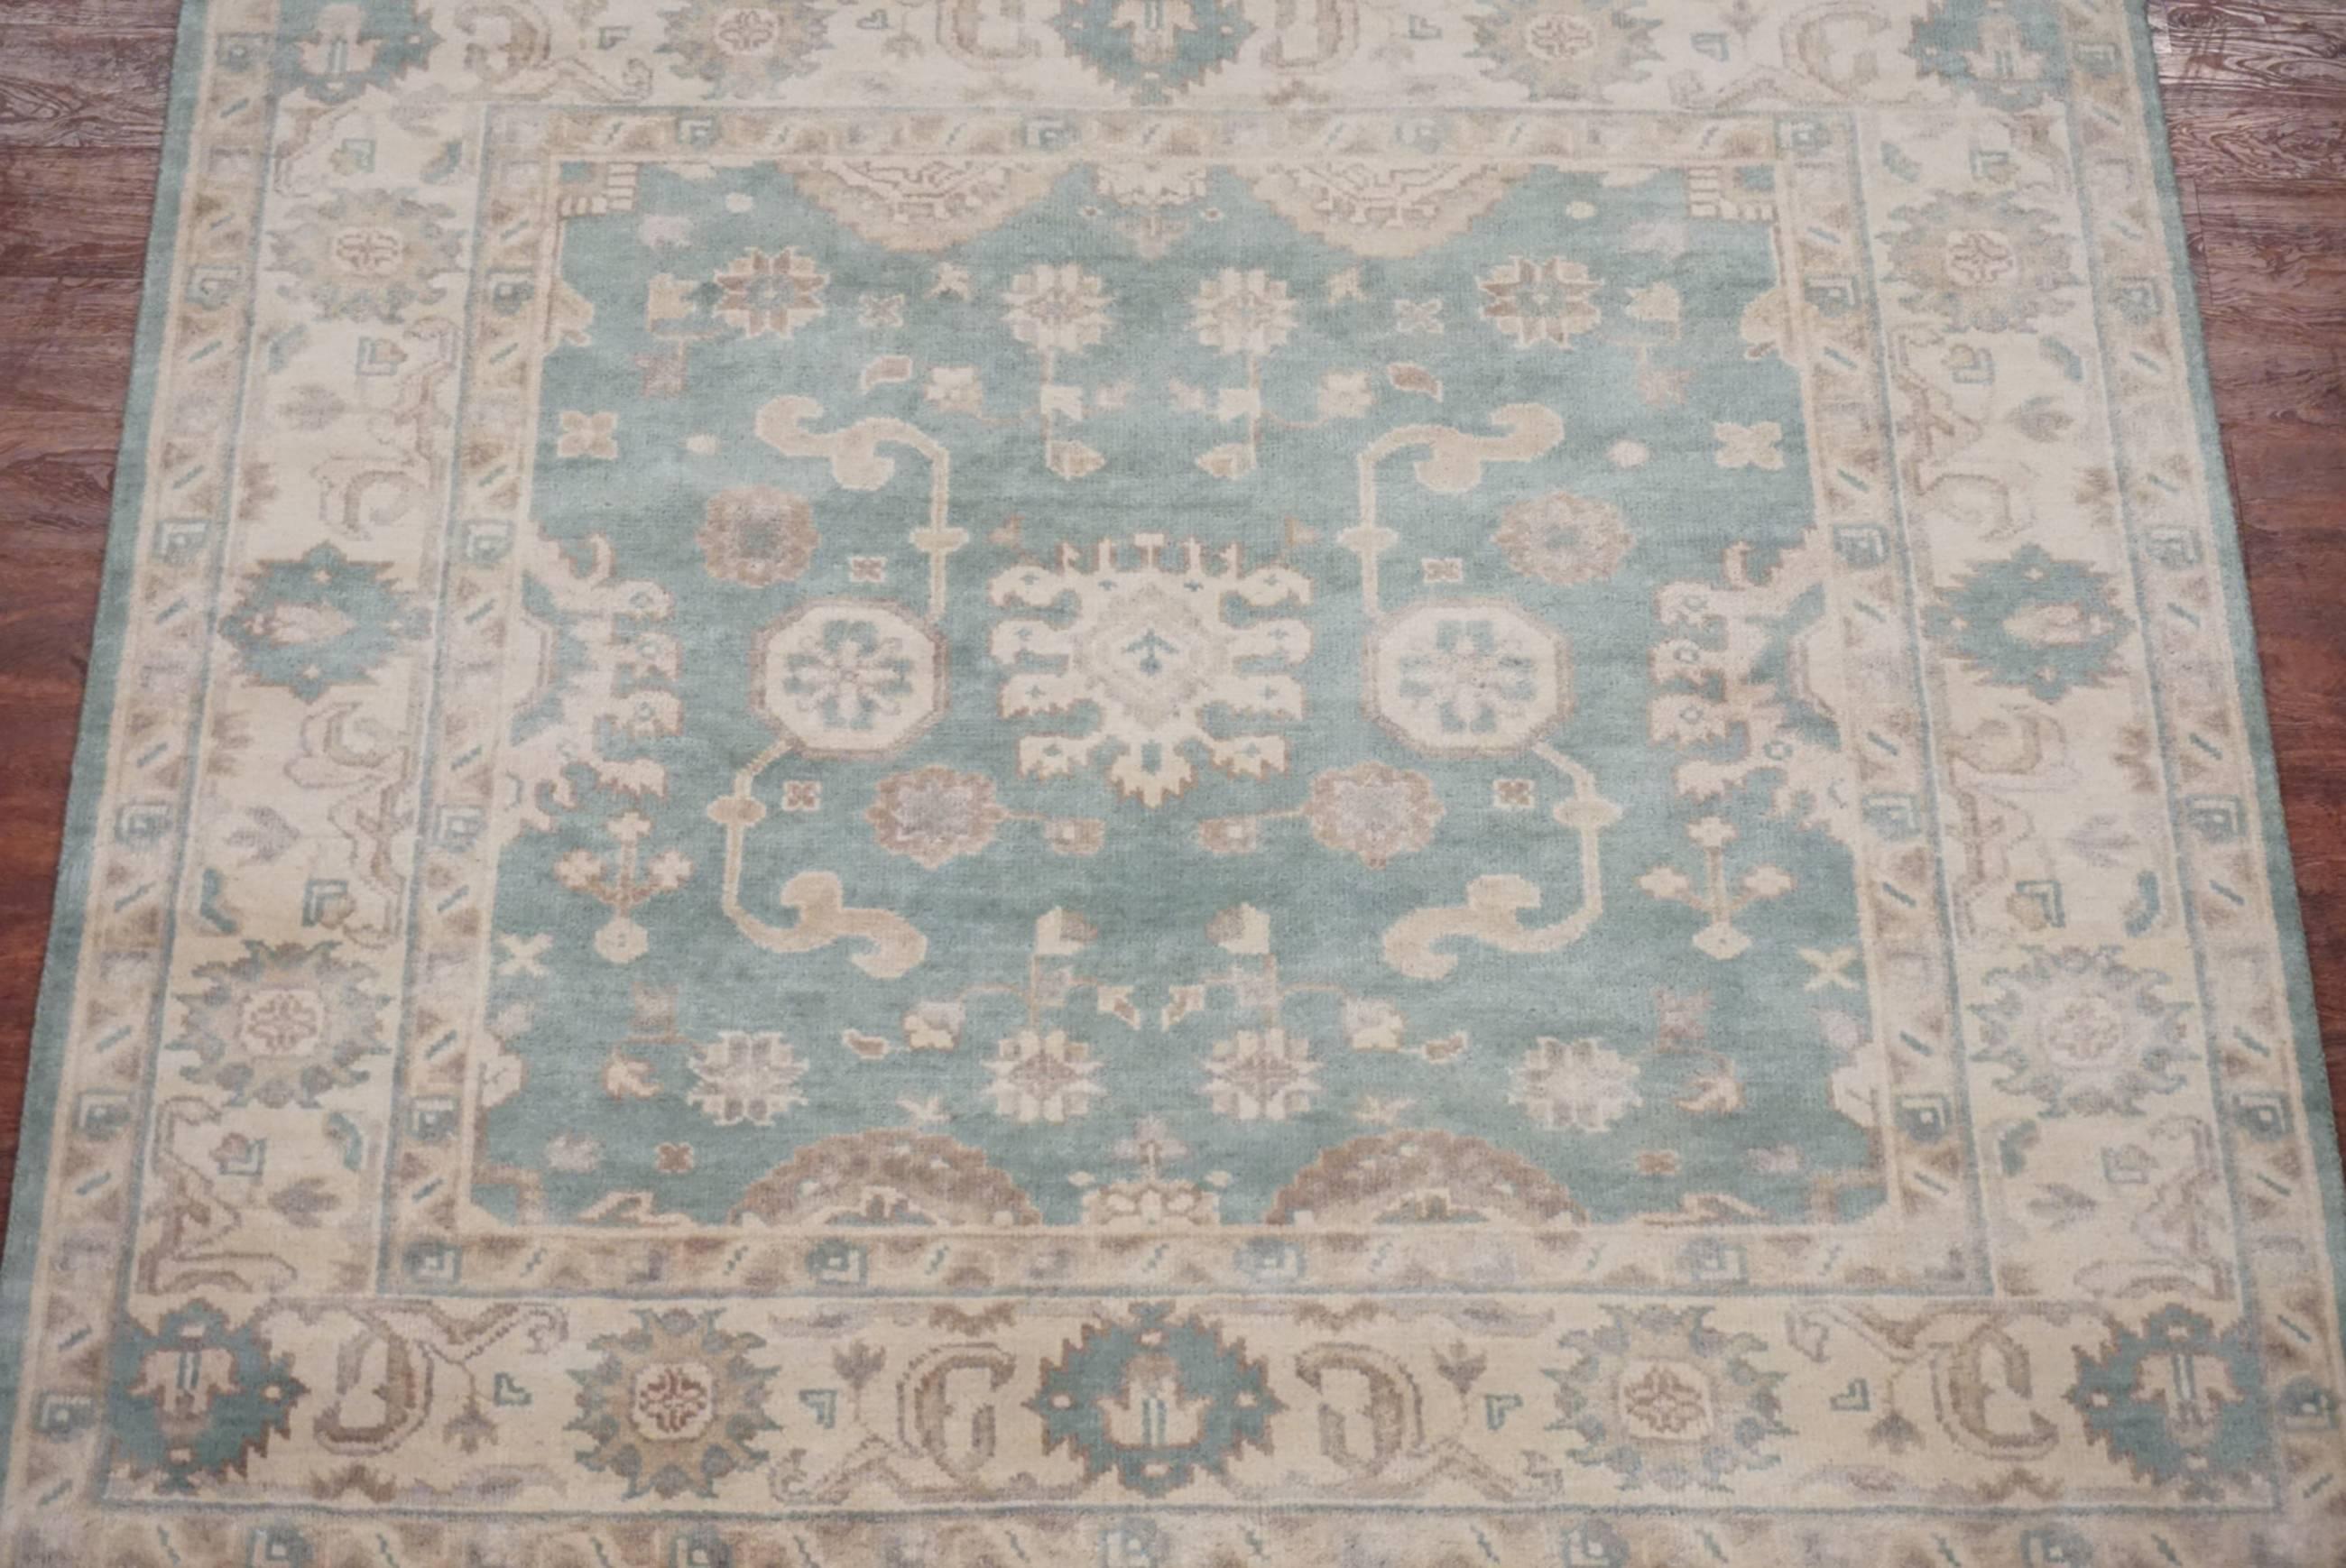 Green square Oushak rug

2015

Measures: 5' 11